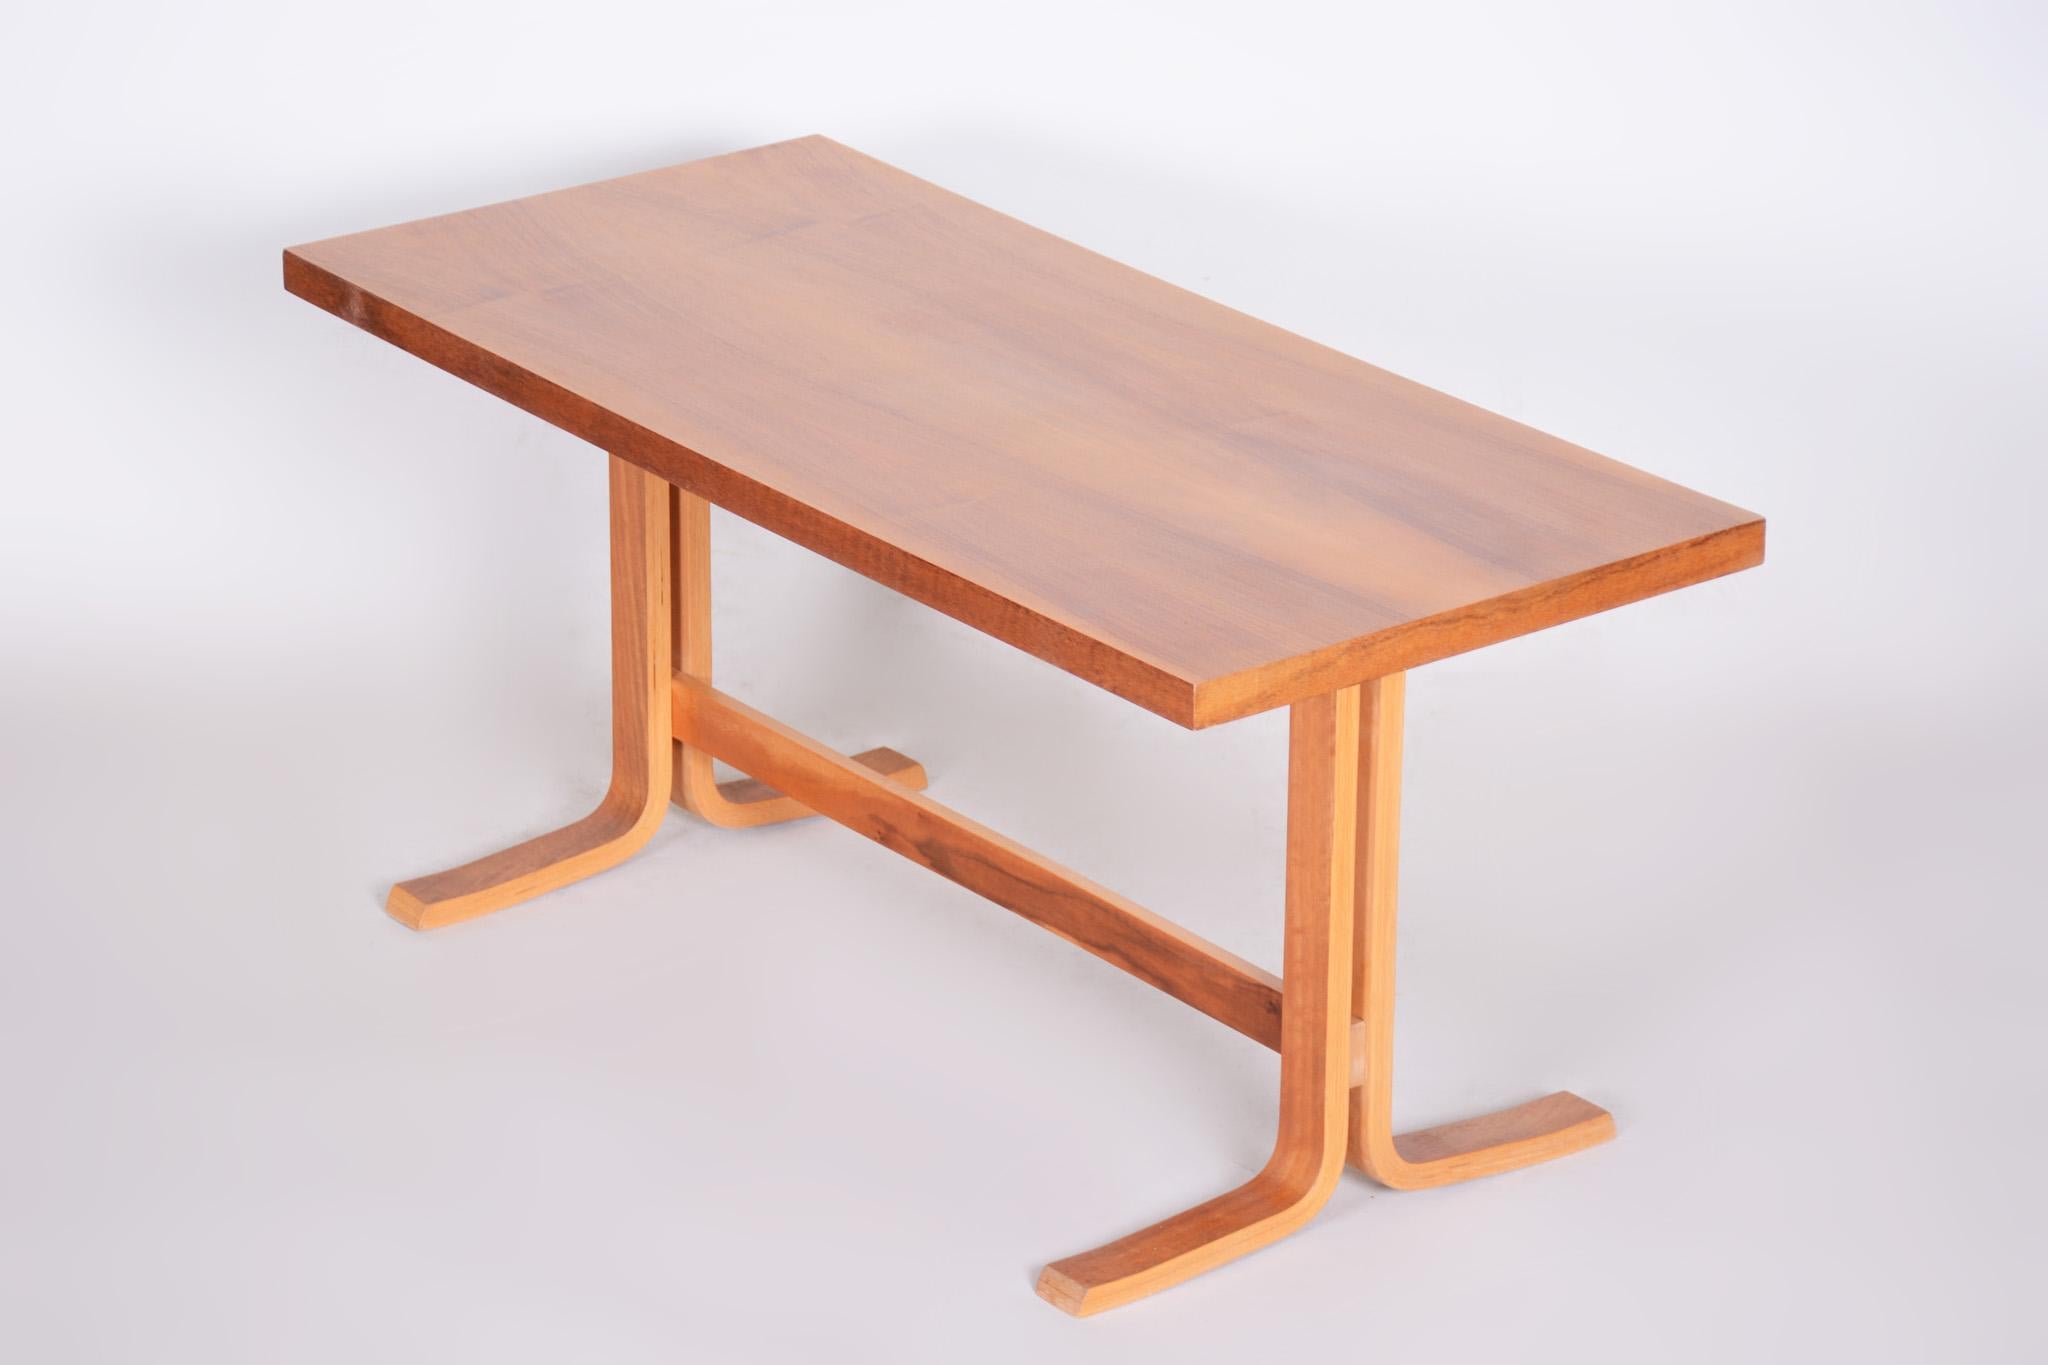 Original Rectangular Oak Table, Czech Mid-Century Modern, 1960s For Sale 1